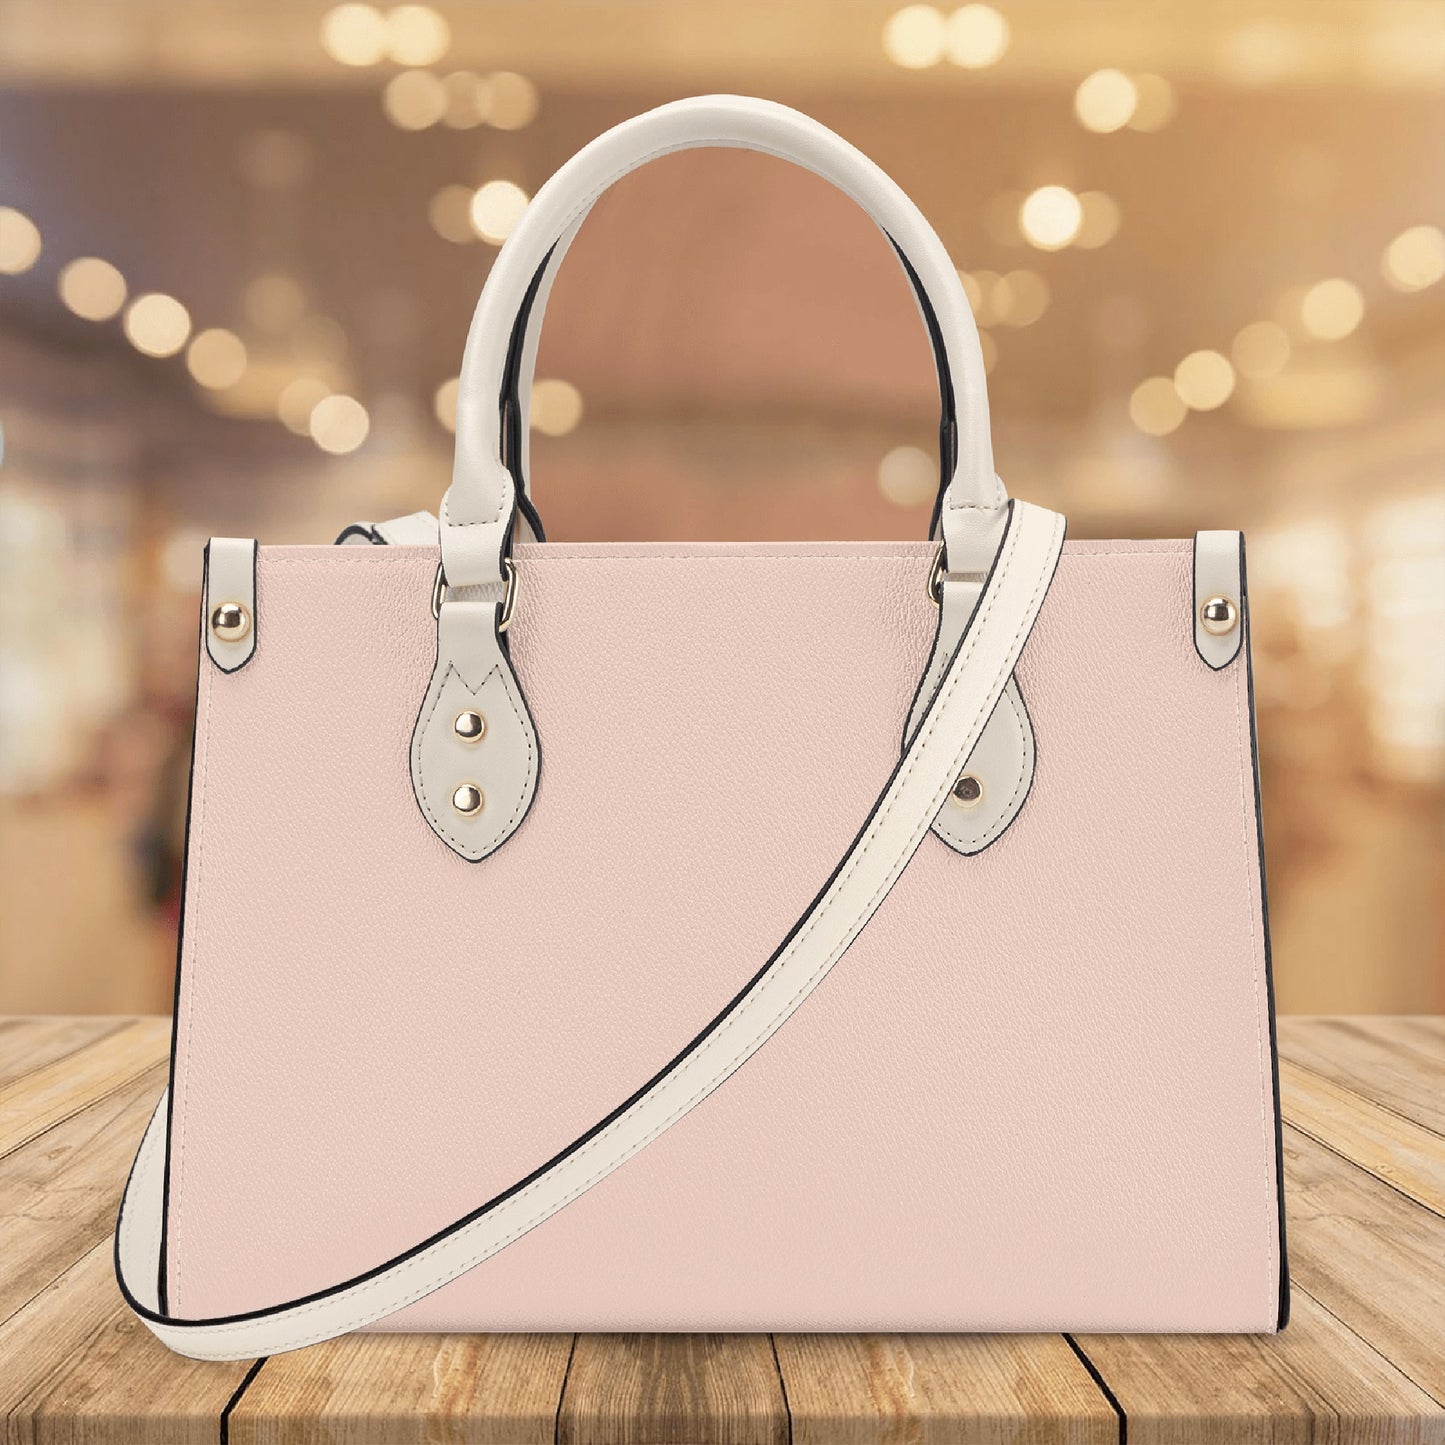 Rudy - Luxury Women Handbag